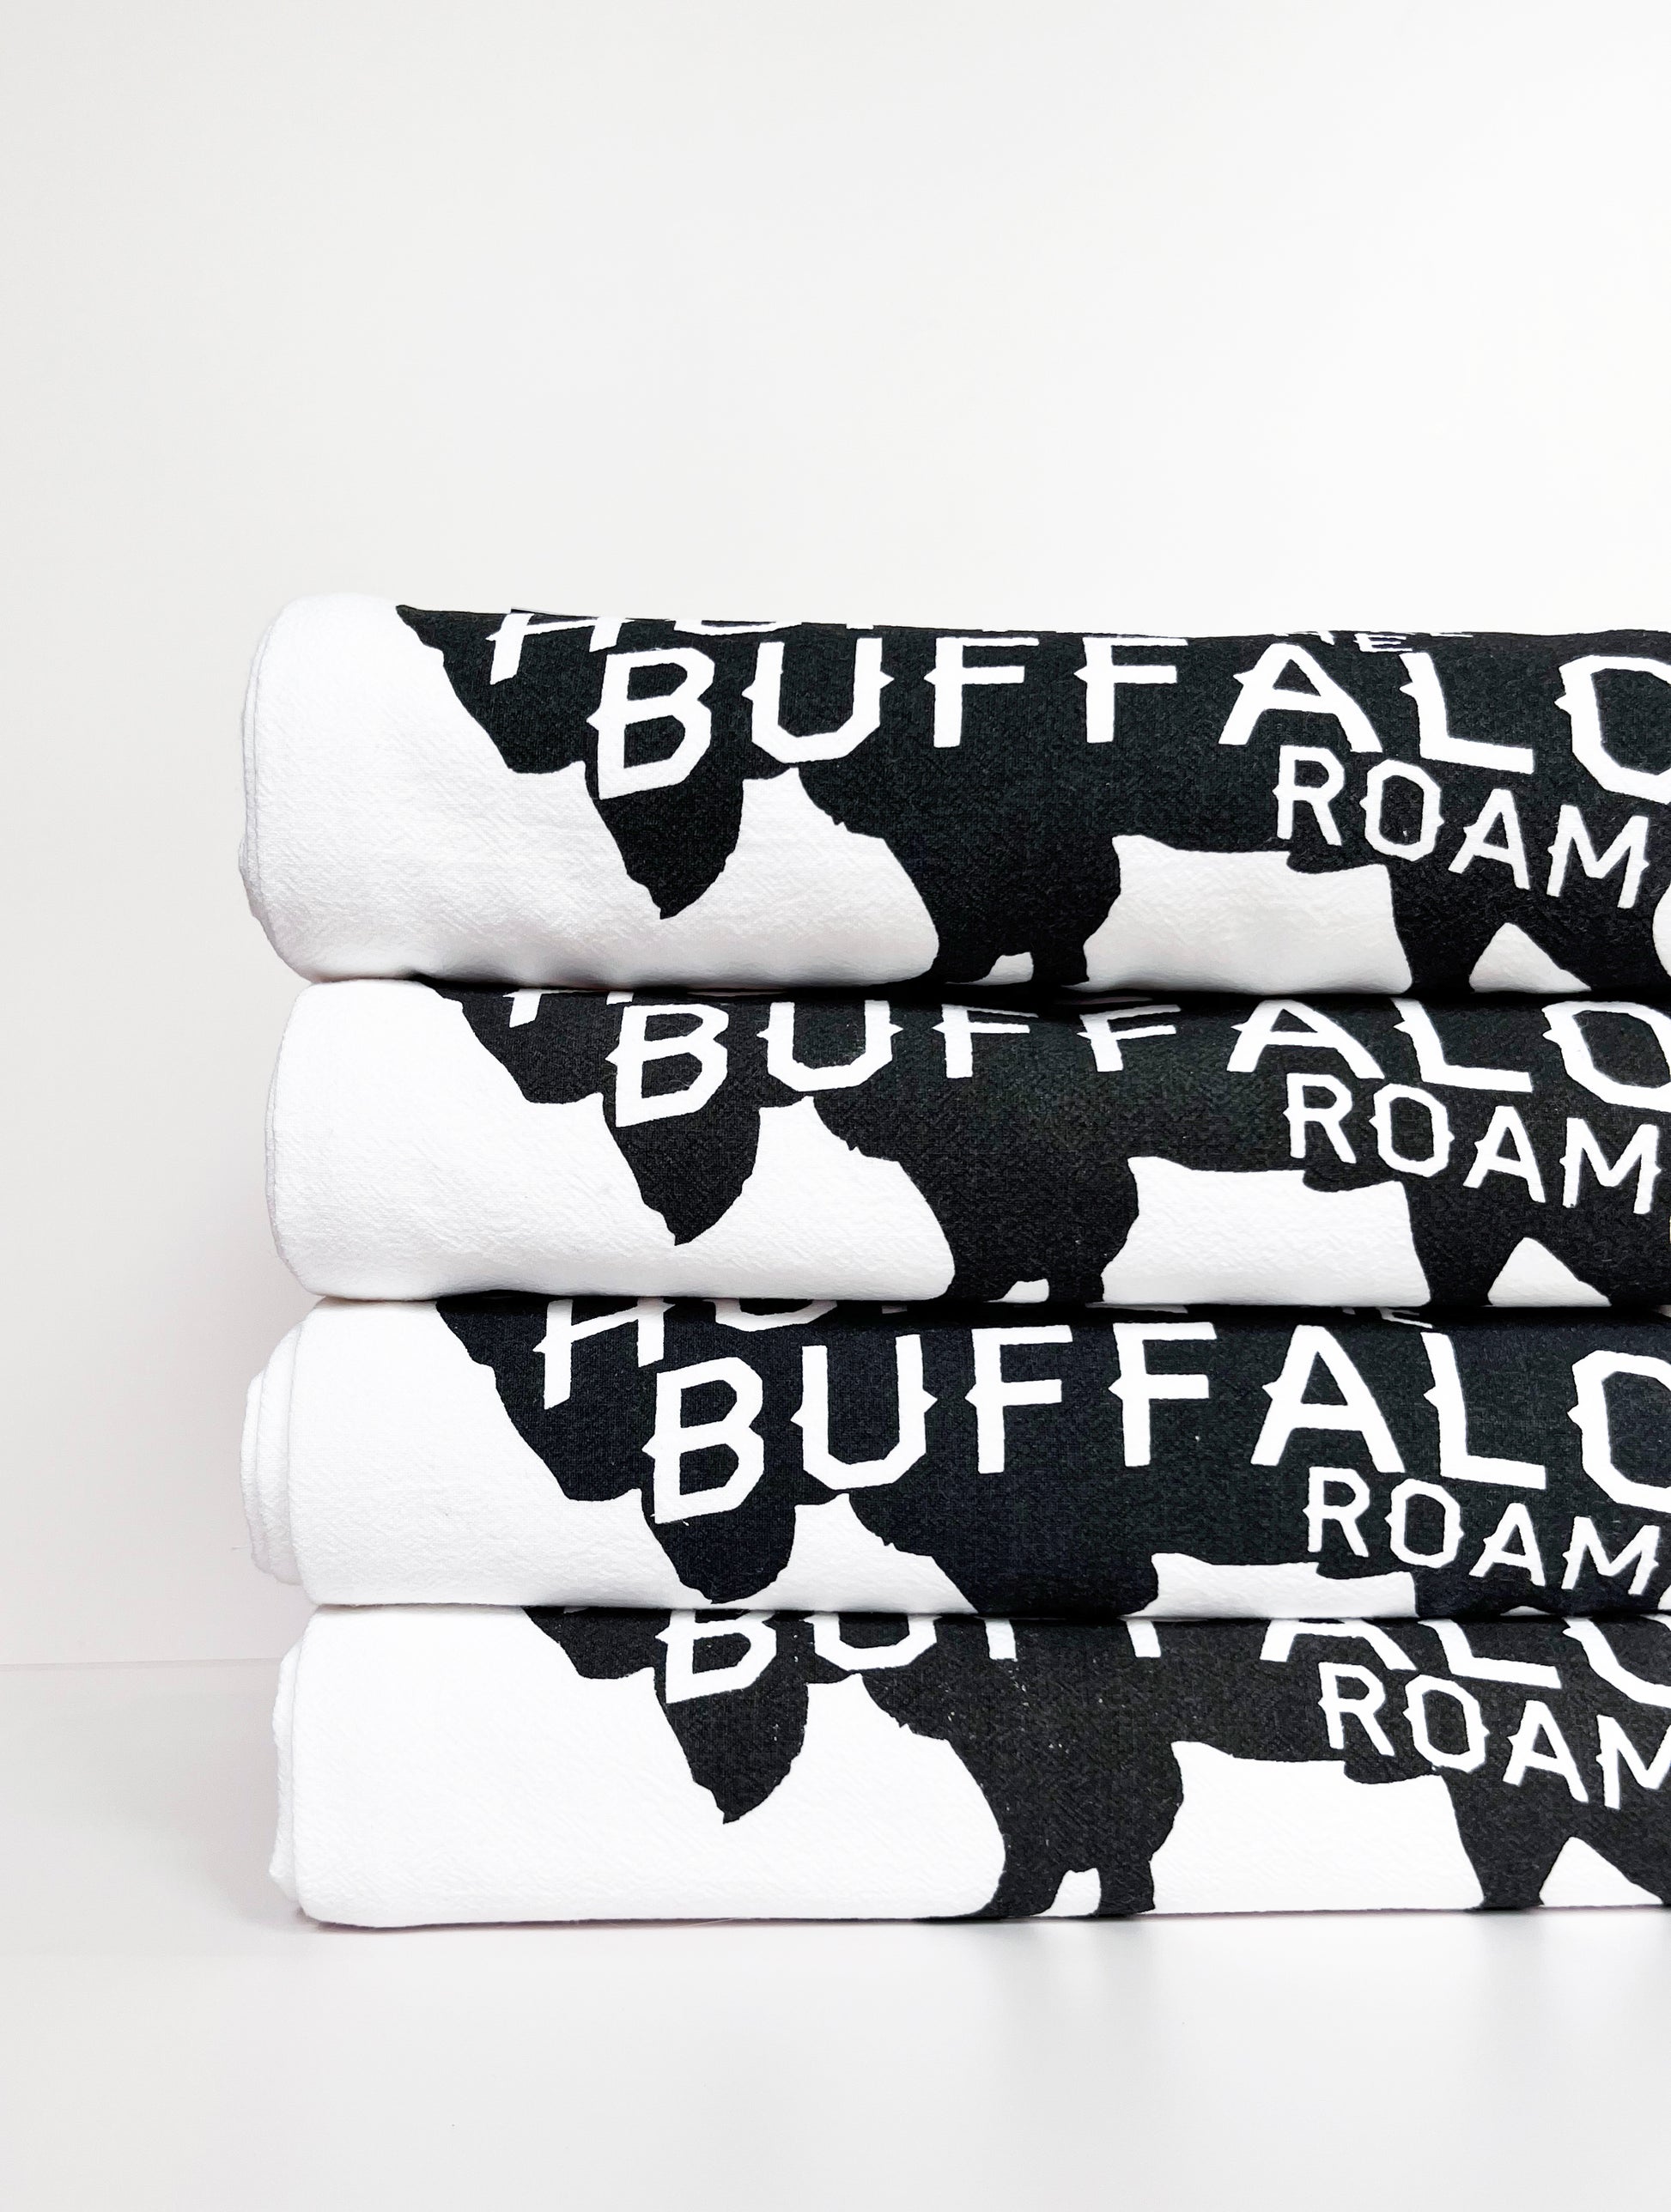 Buffalo Towels – Buffalo Seamery